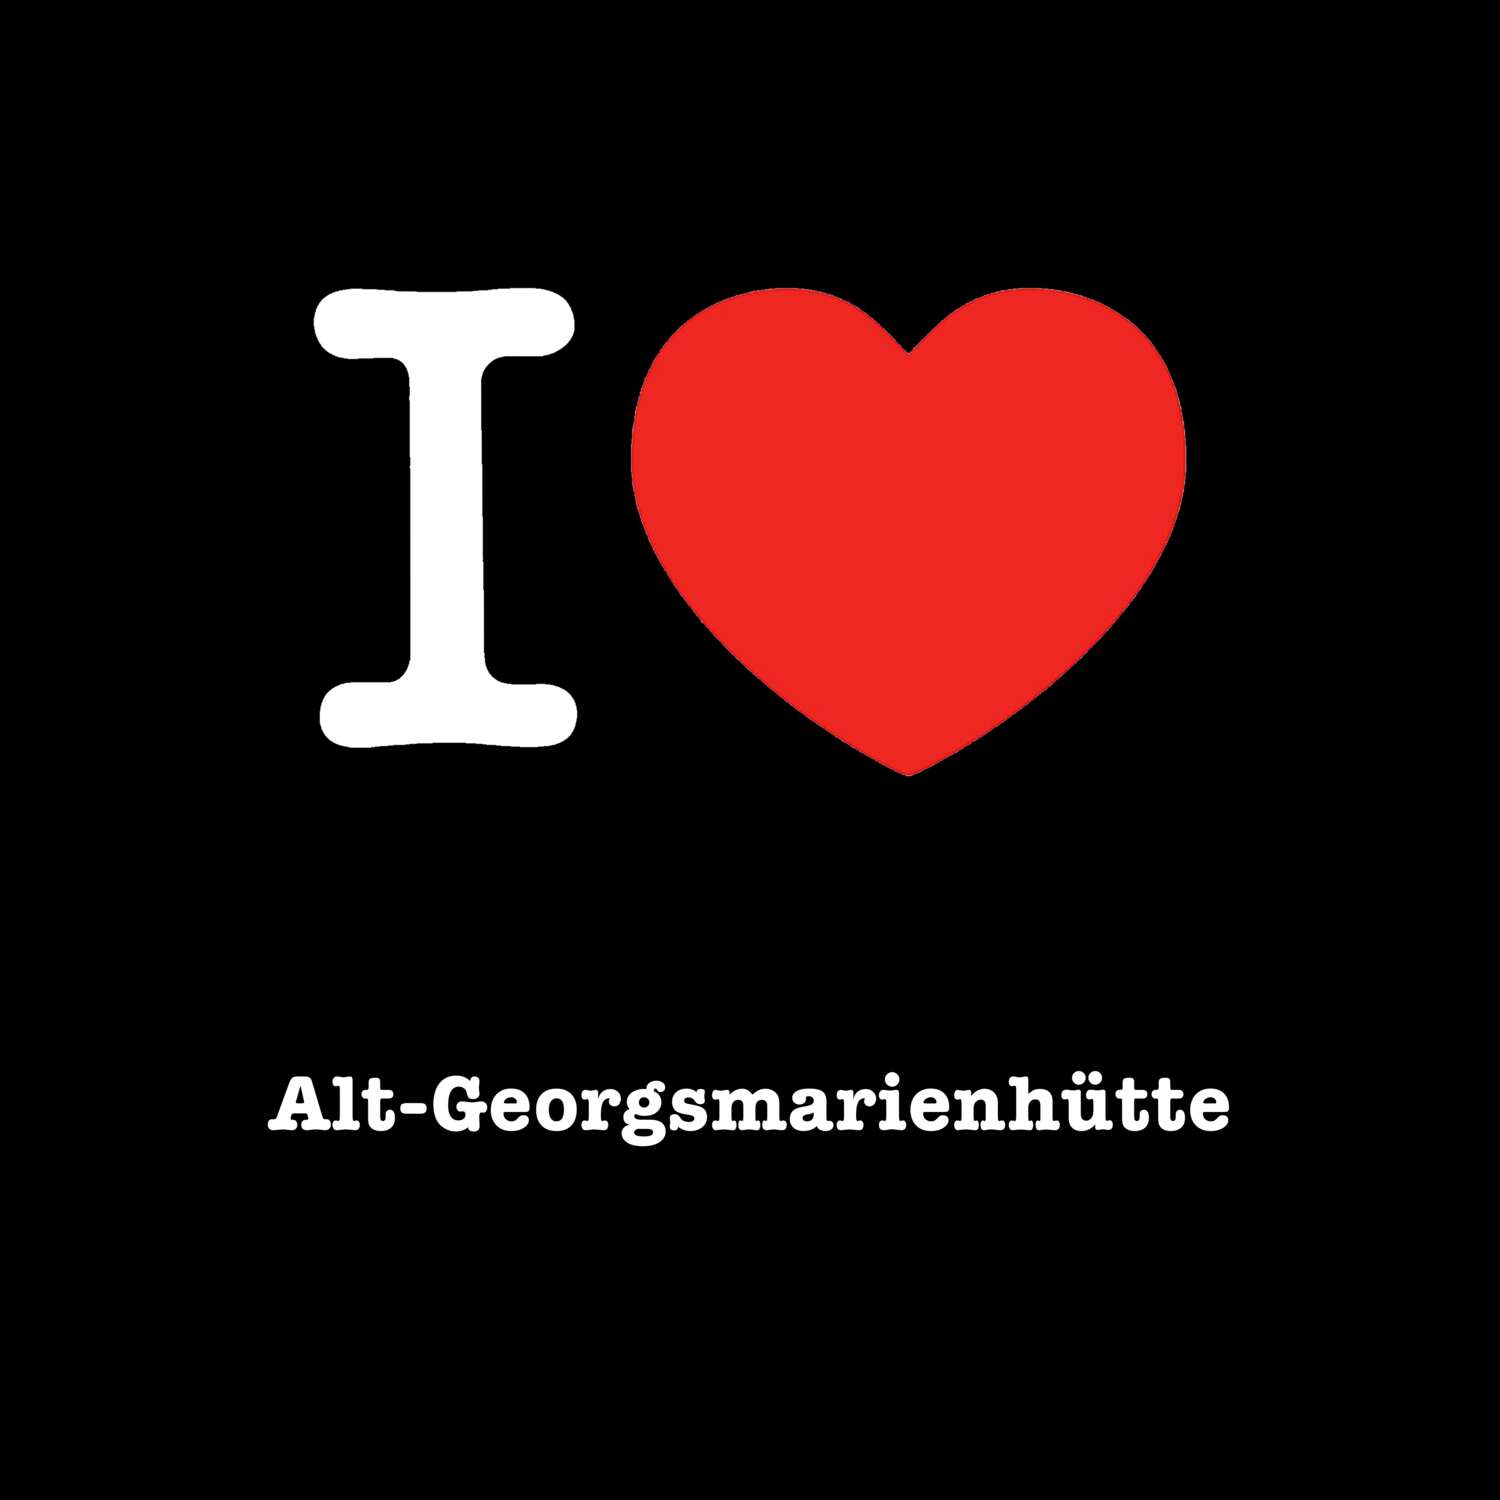 Alt-Georgsmarienhütte T-Shirt »I love«